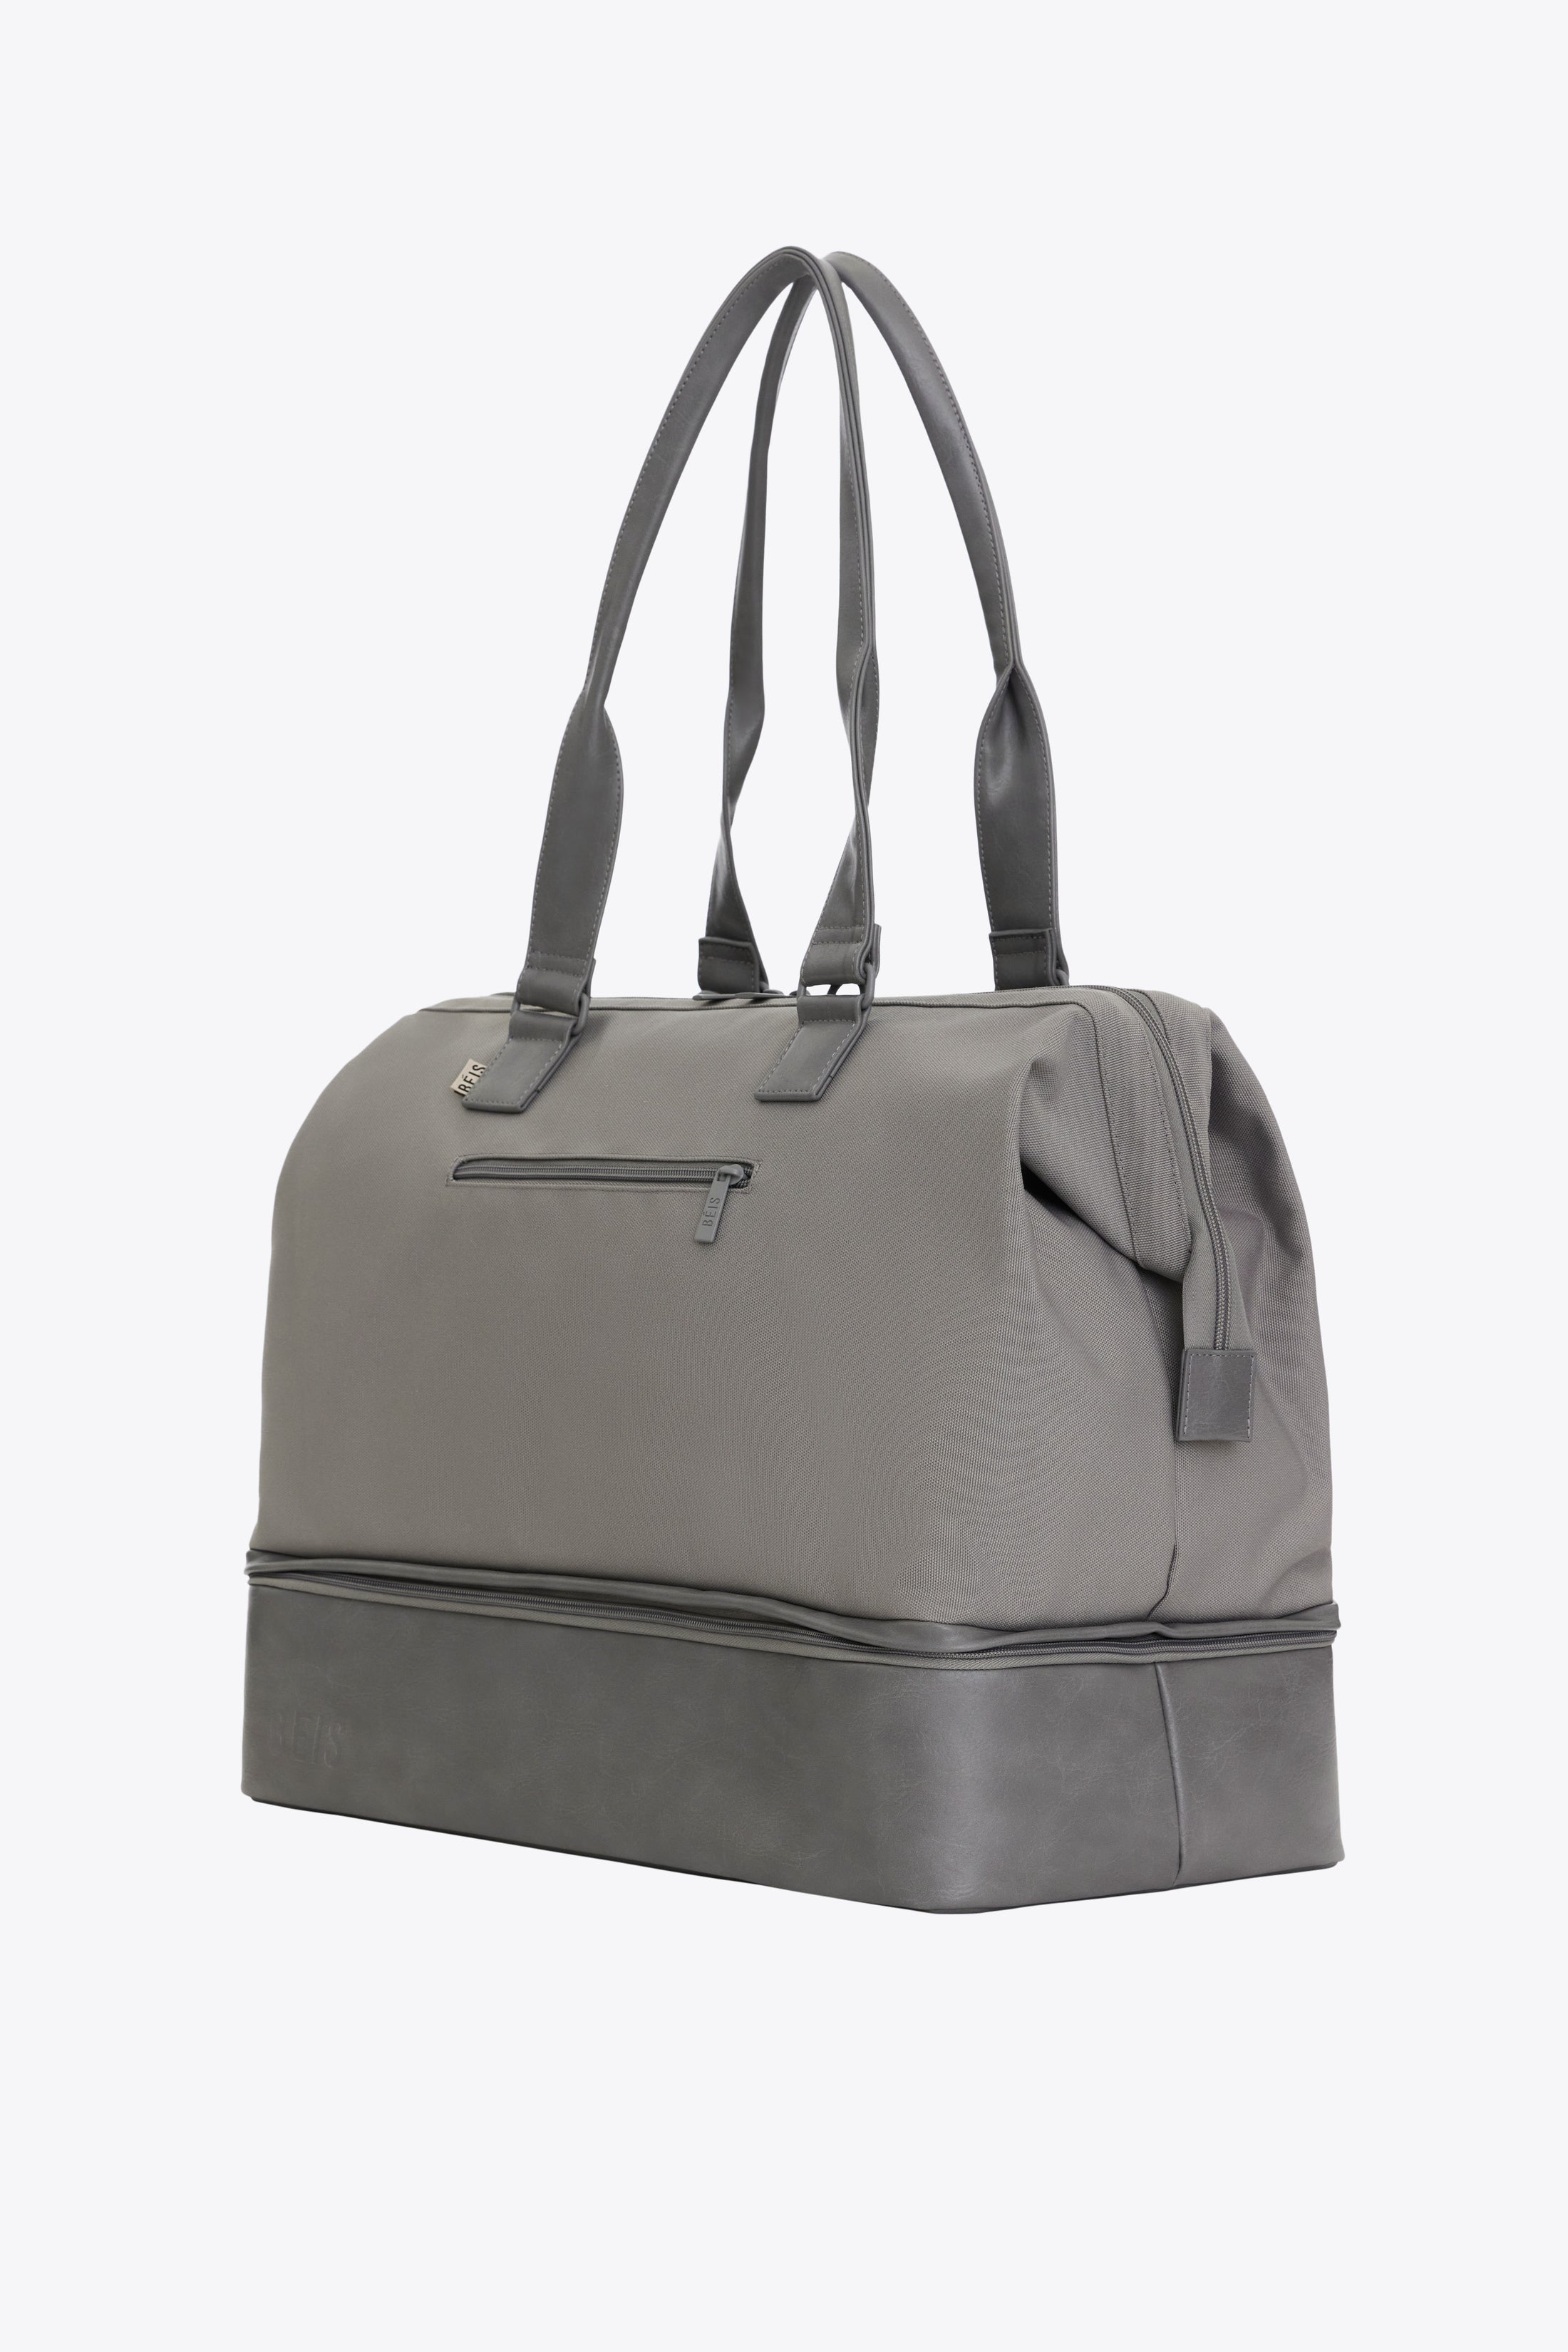 BÉIS 'The Convertible Weekender' in Gray - Gray Weekend Bag & Overnight Bag